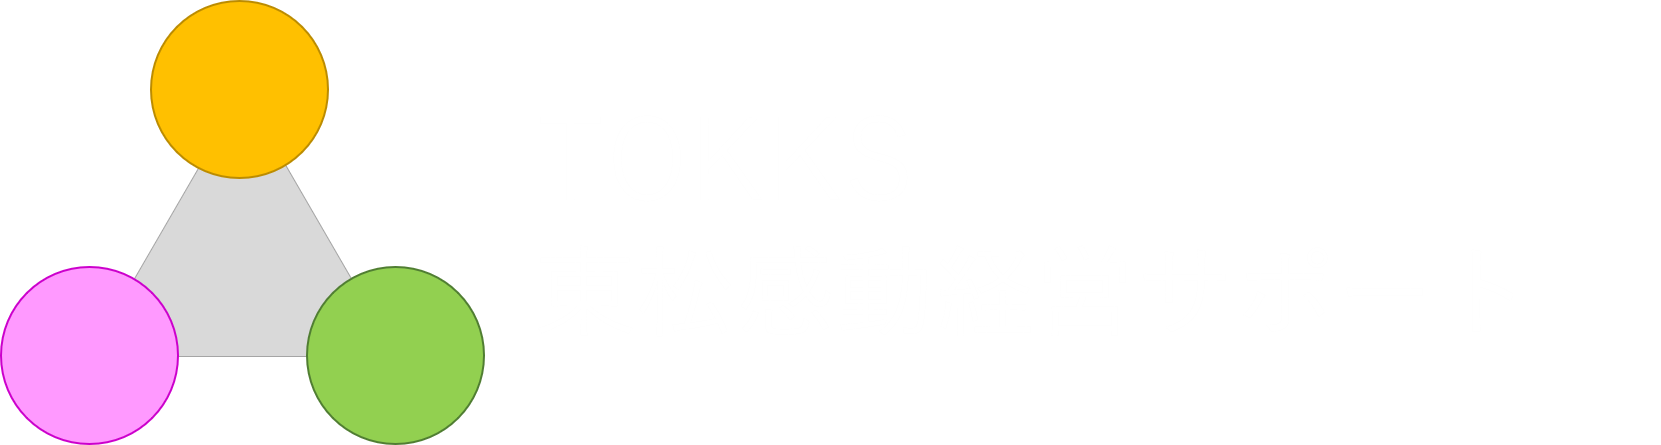 TOKKS東松感動経営サポート